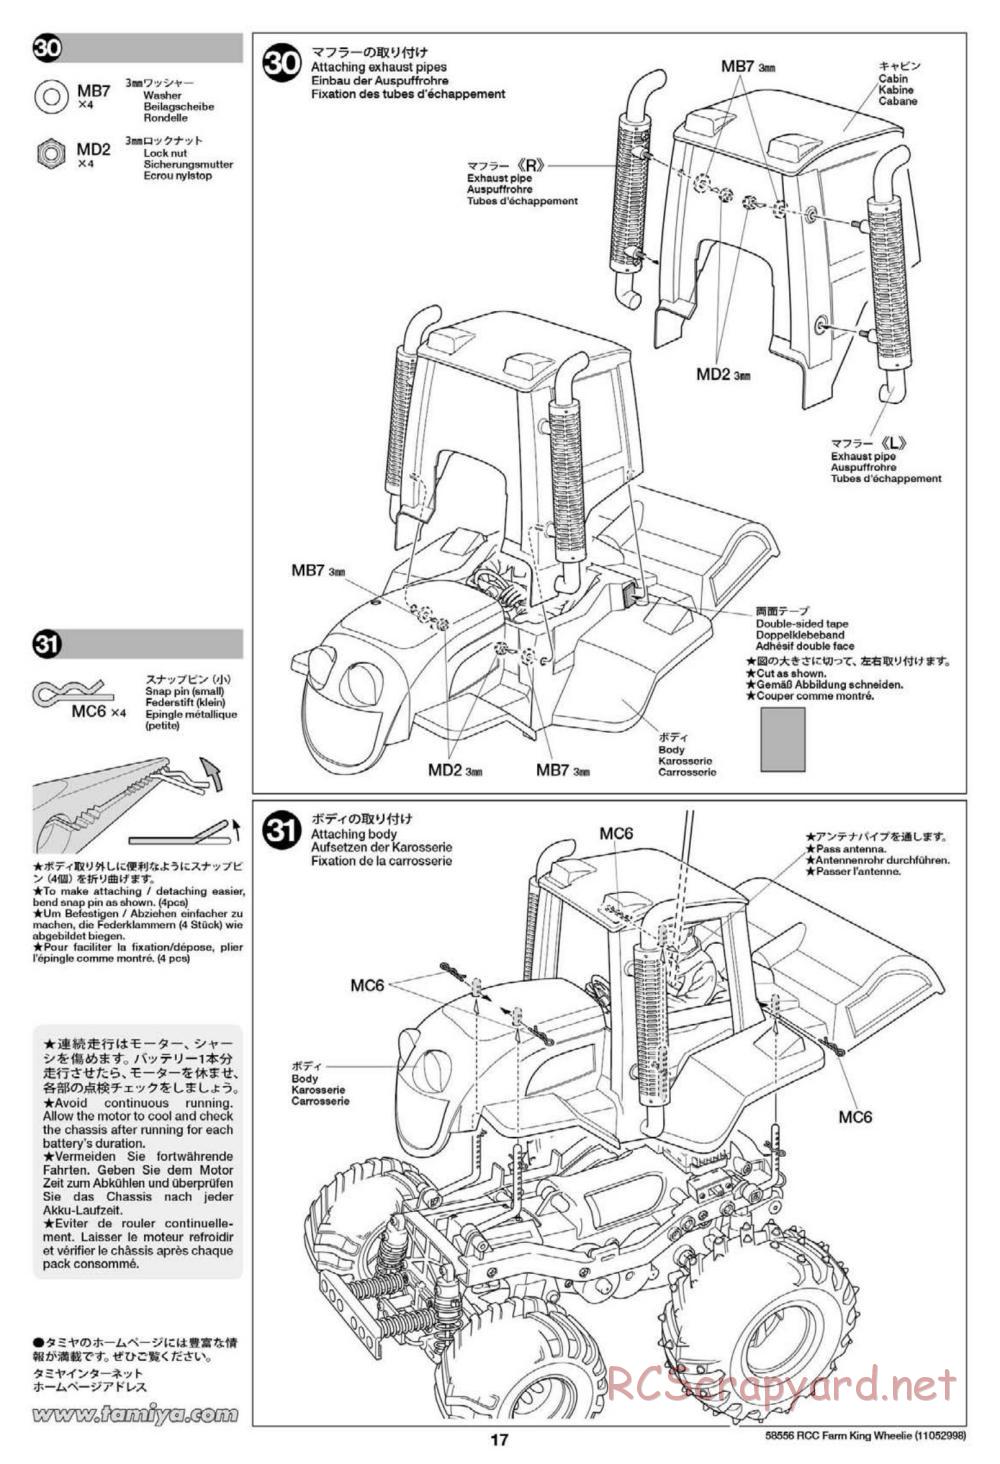 Tamiya - Farm King Wheelie Chassis - Manual - Page 17